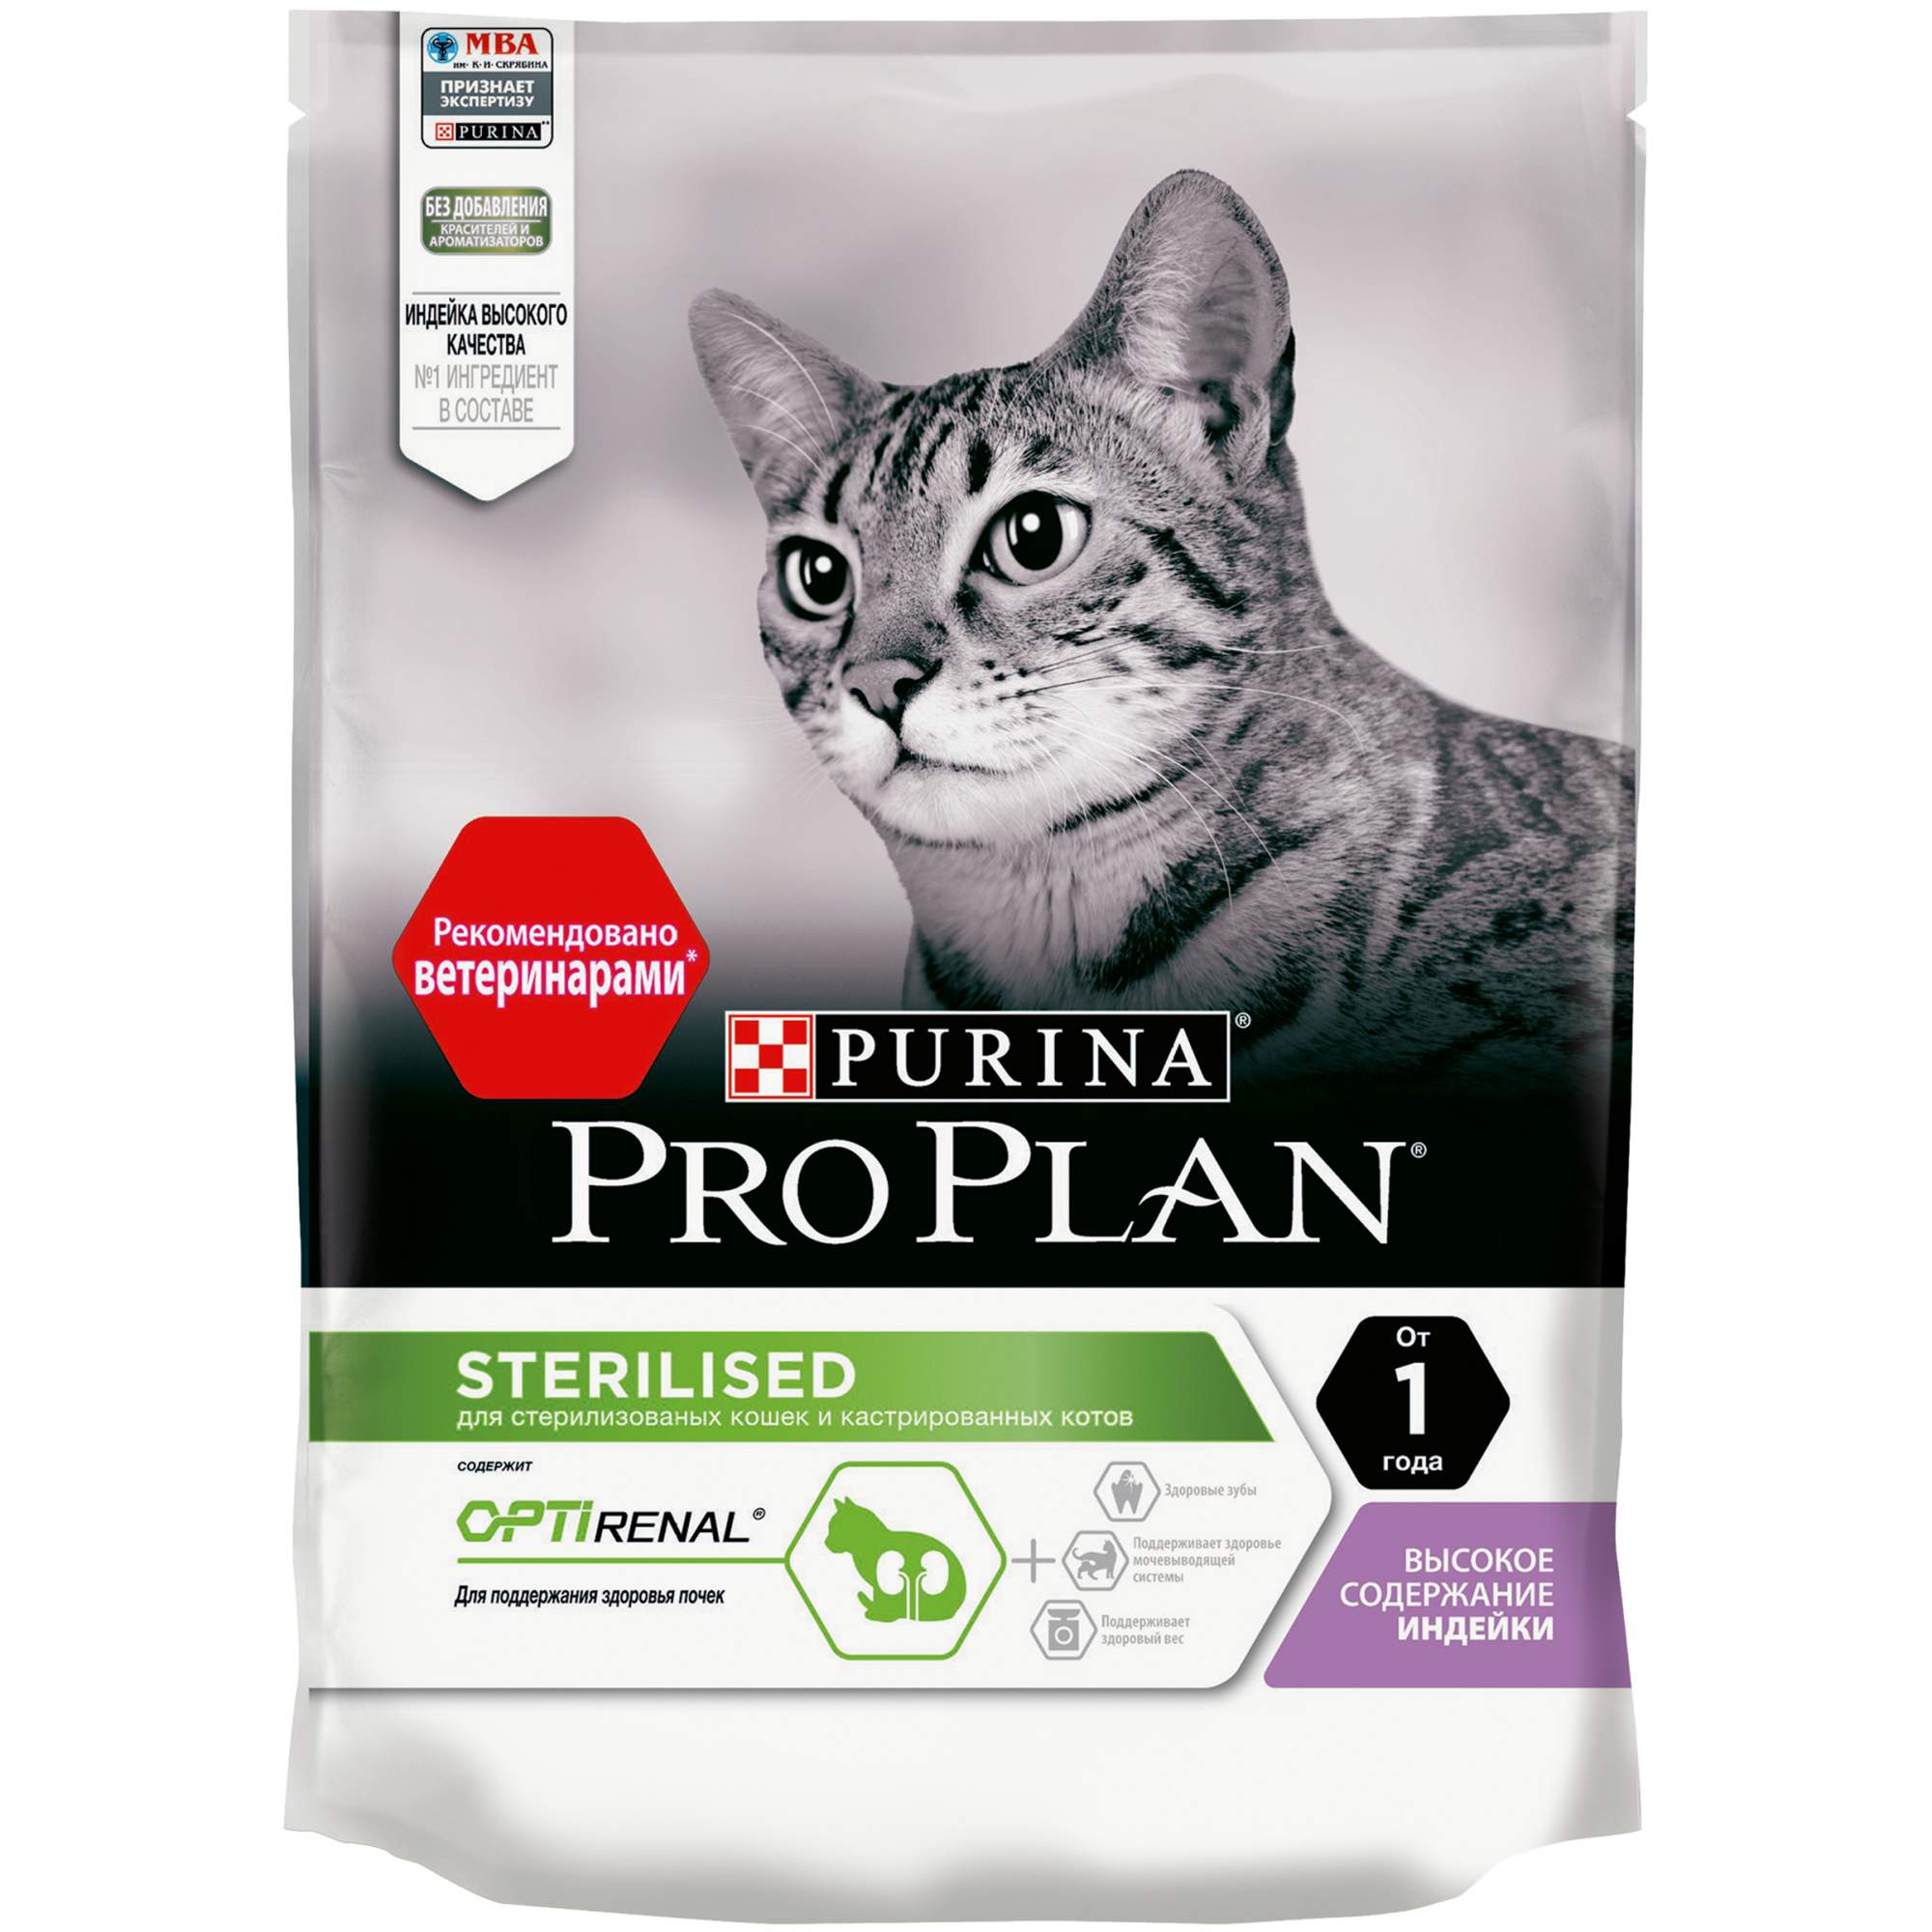 Сухой корм для кошек PRO PLAN Sterilised Optirenal, для стерилизованных, индейка, 0,2кг